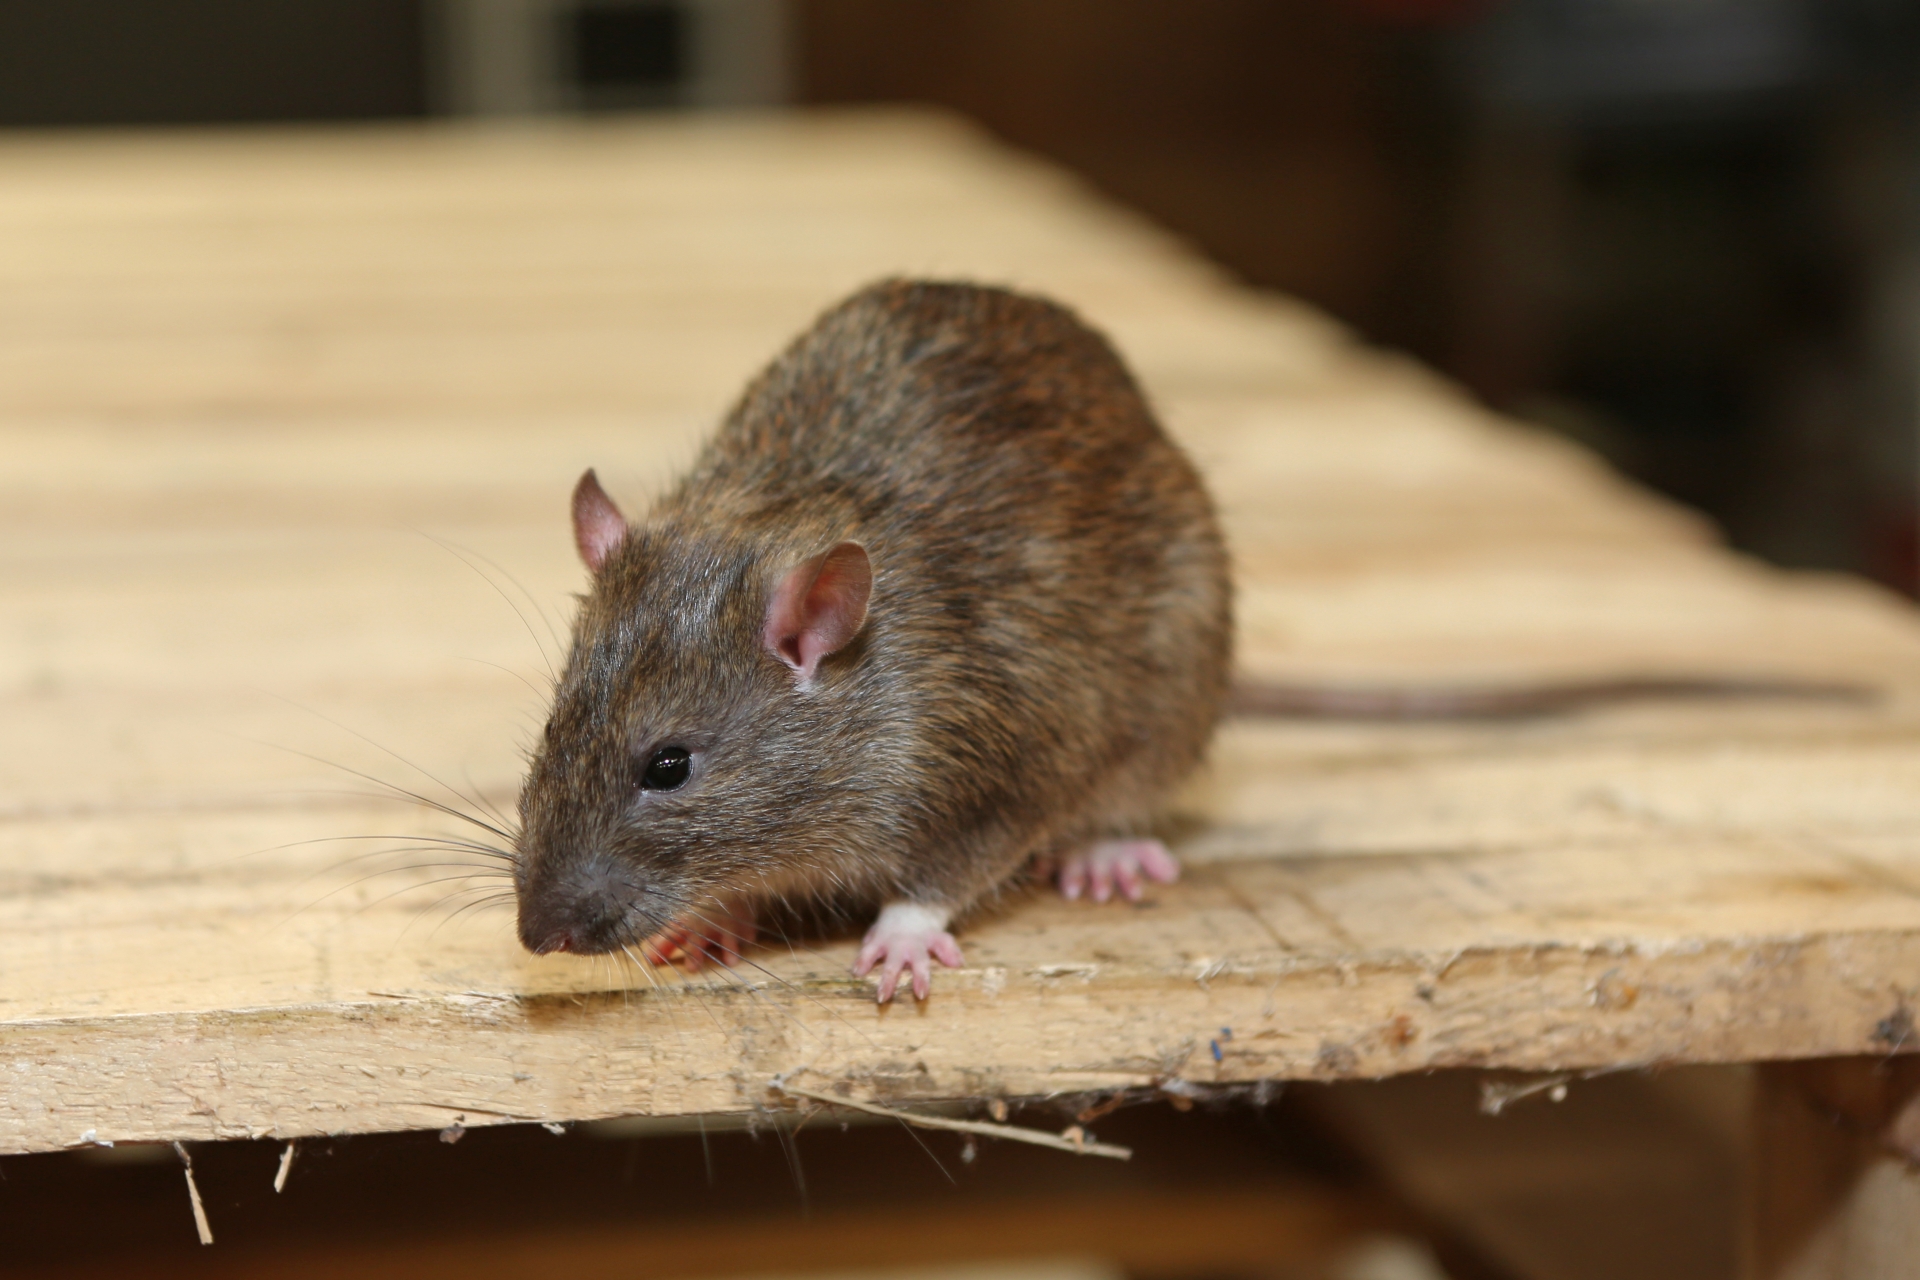 Rat extermination, Pest Control in Moorgate, Liverpool Street, EC2. Call Now 020 8166 9746